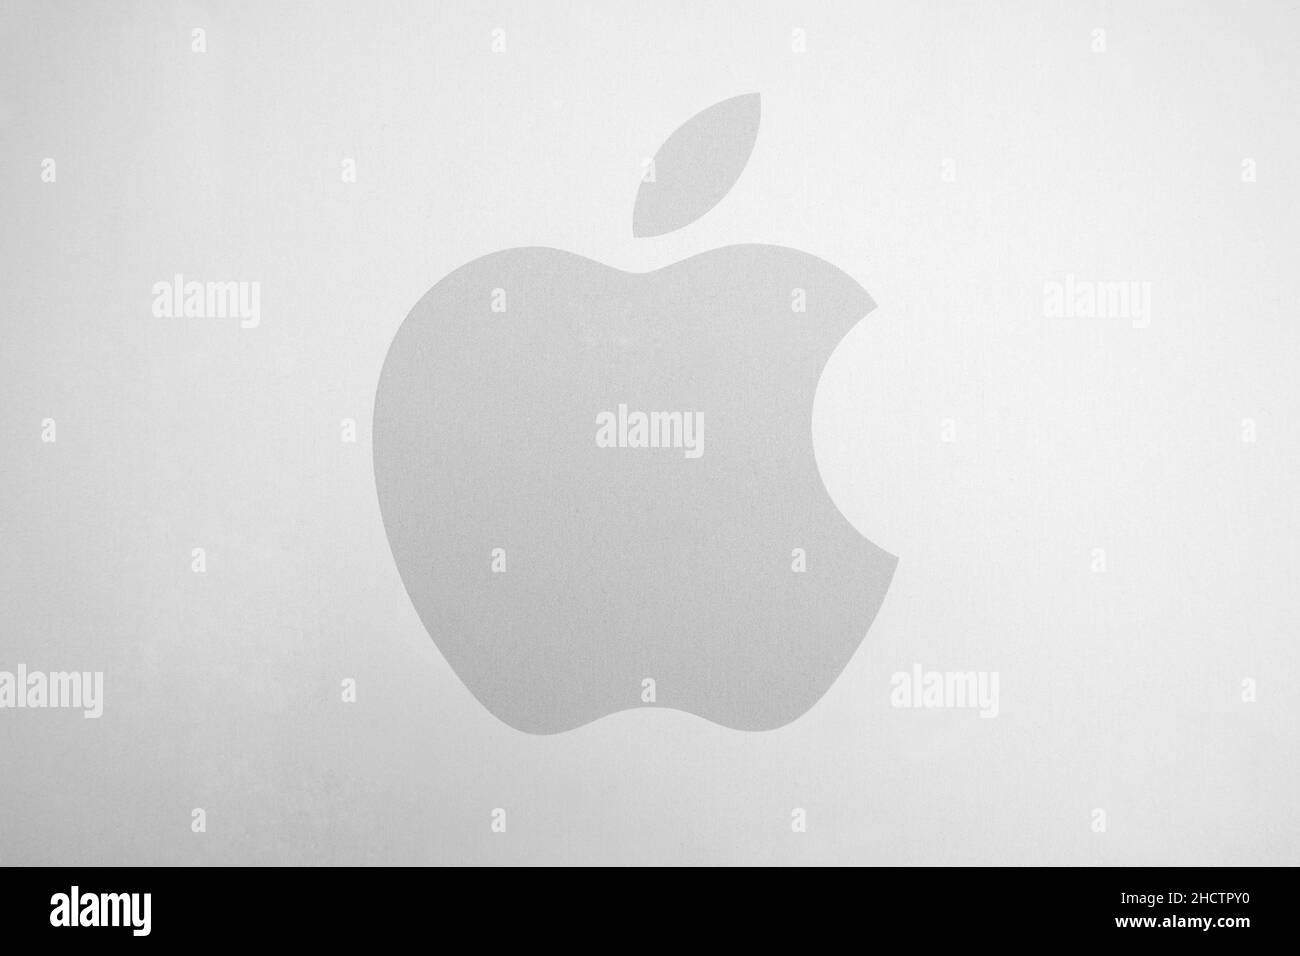 Apple logo Black and White Stock Photos & Images - Alamy